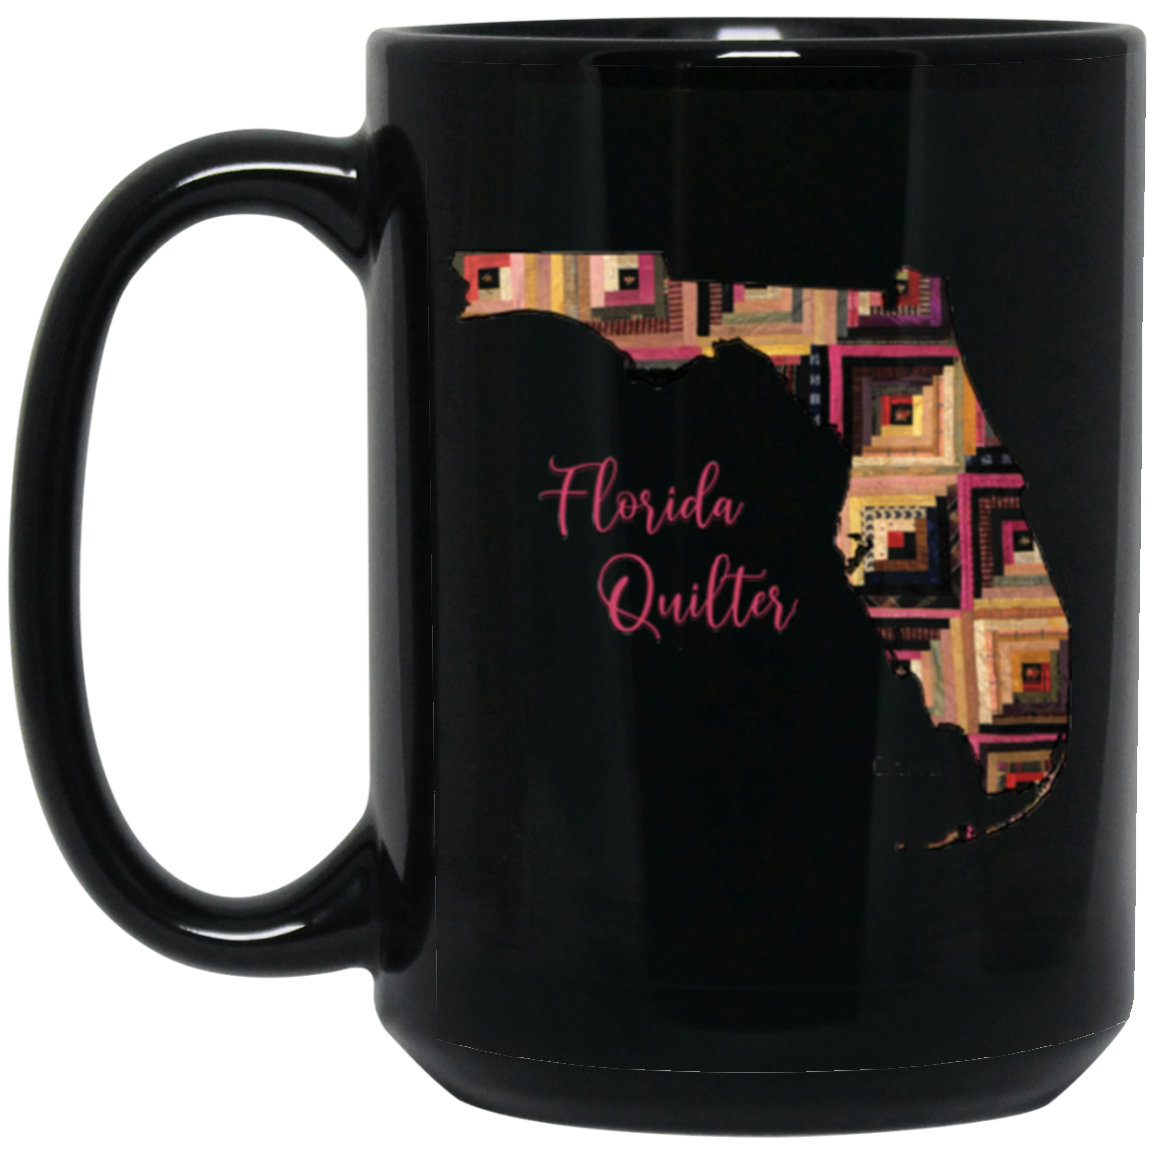 Florida Quilter Mugs